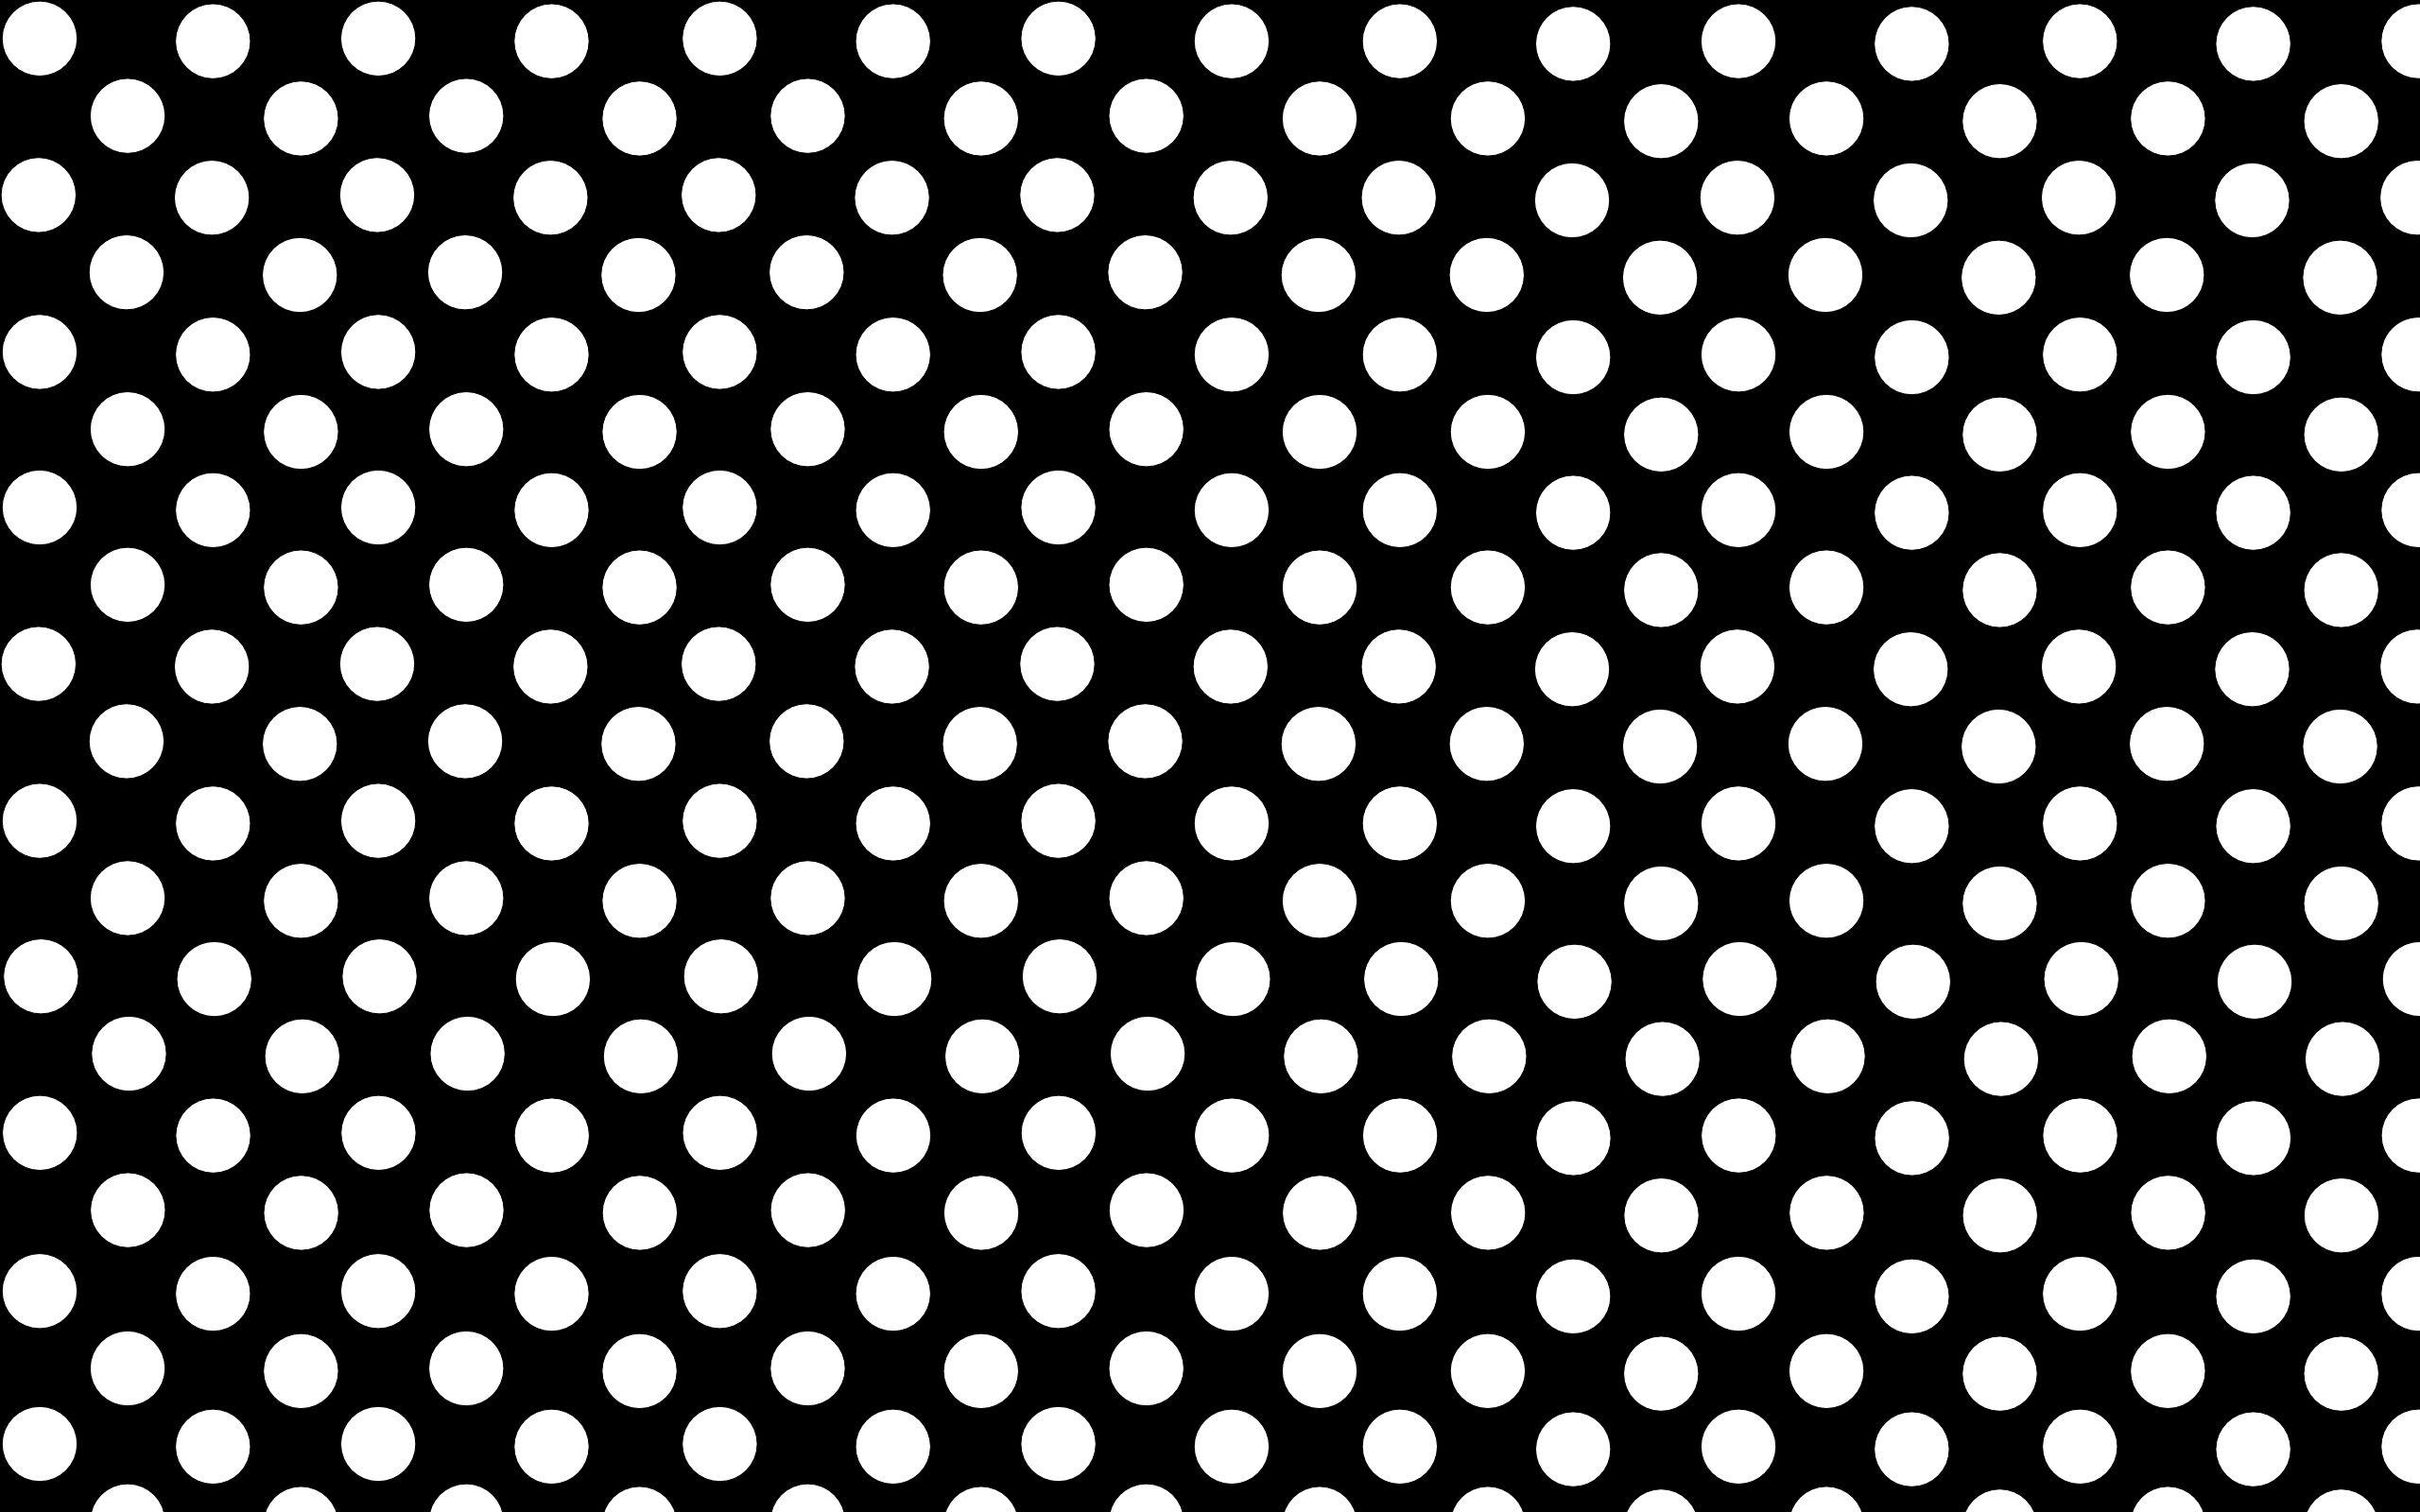 10. Black and White Polka Dot Acrylic Nails - wide 9